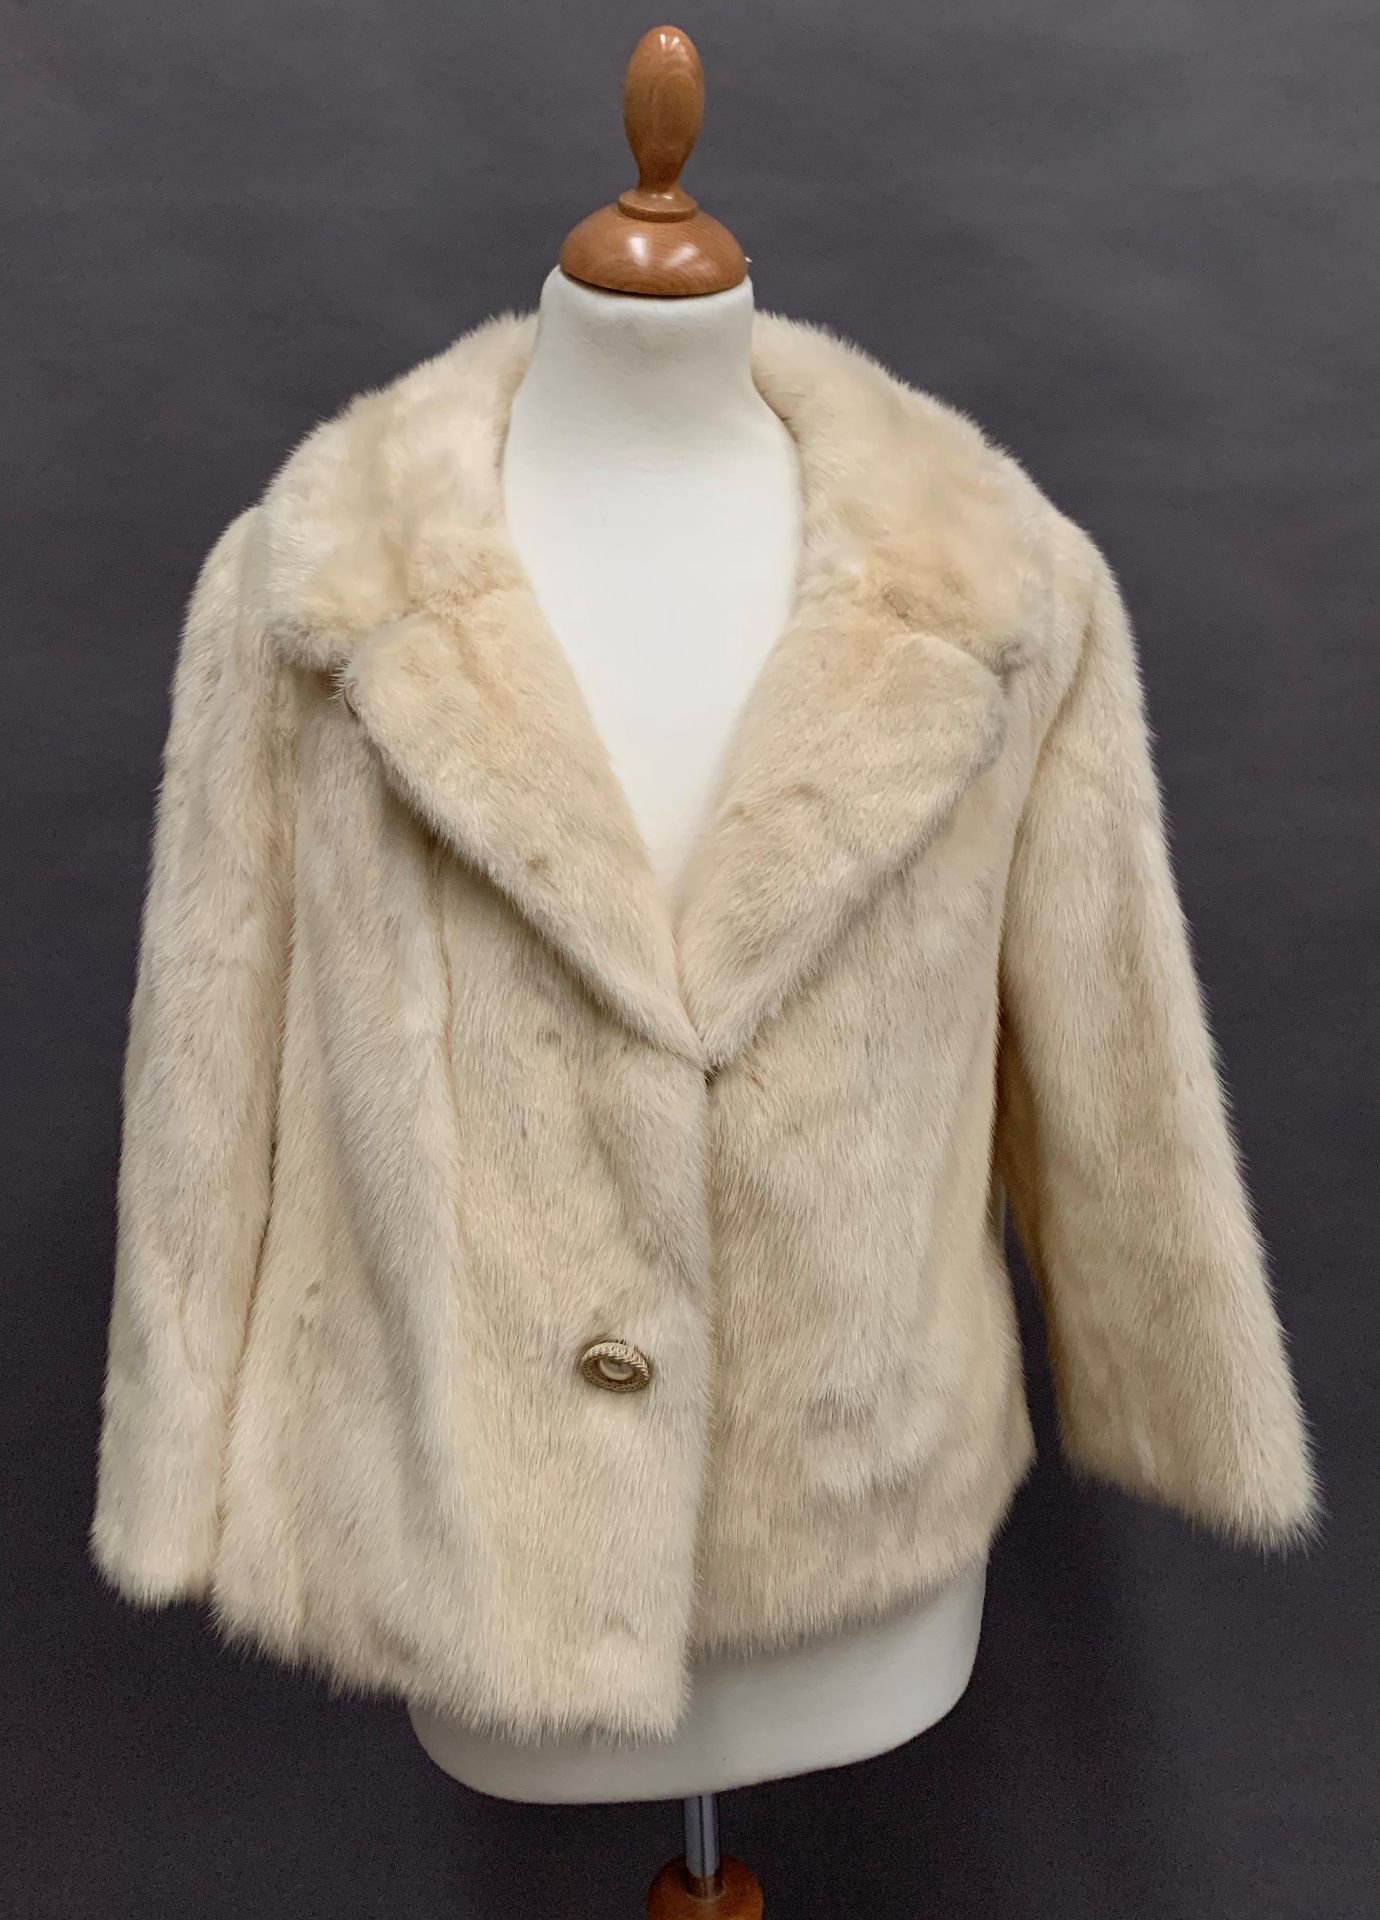 Lady's fur coat